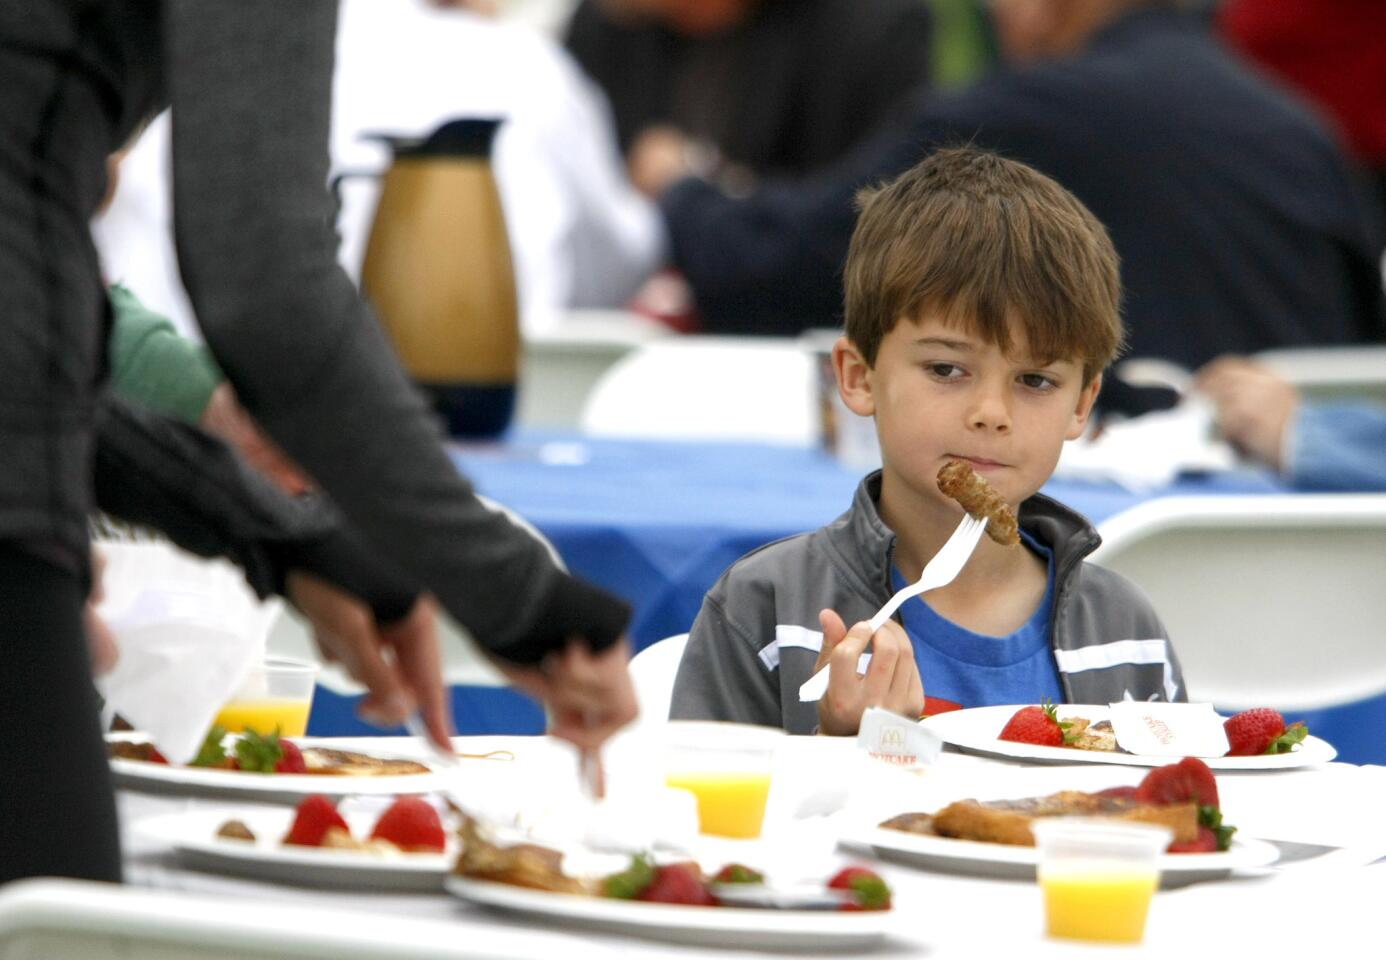 Photo Gallery: The annual Kiwanis Club of La Canada A.M. community breakfast and car show